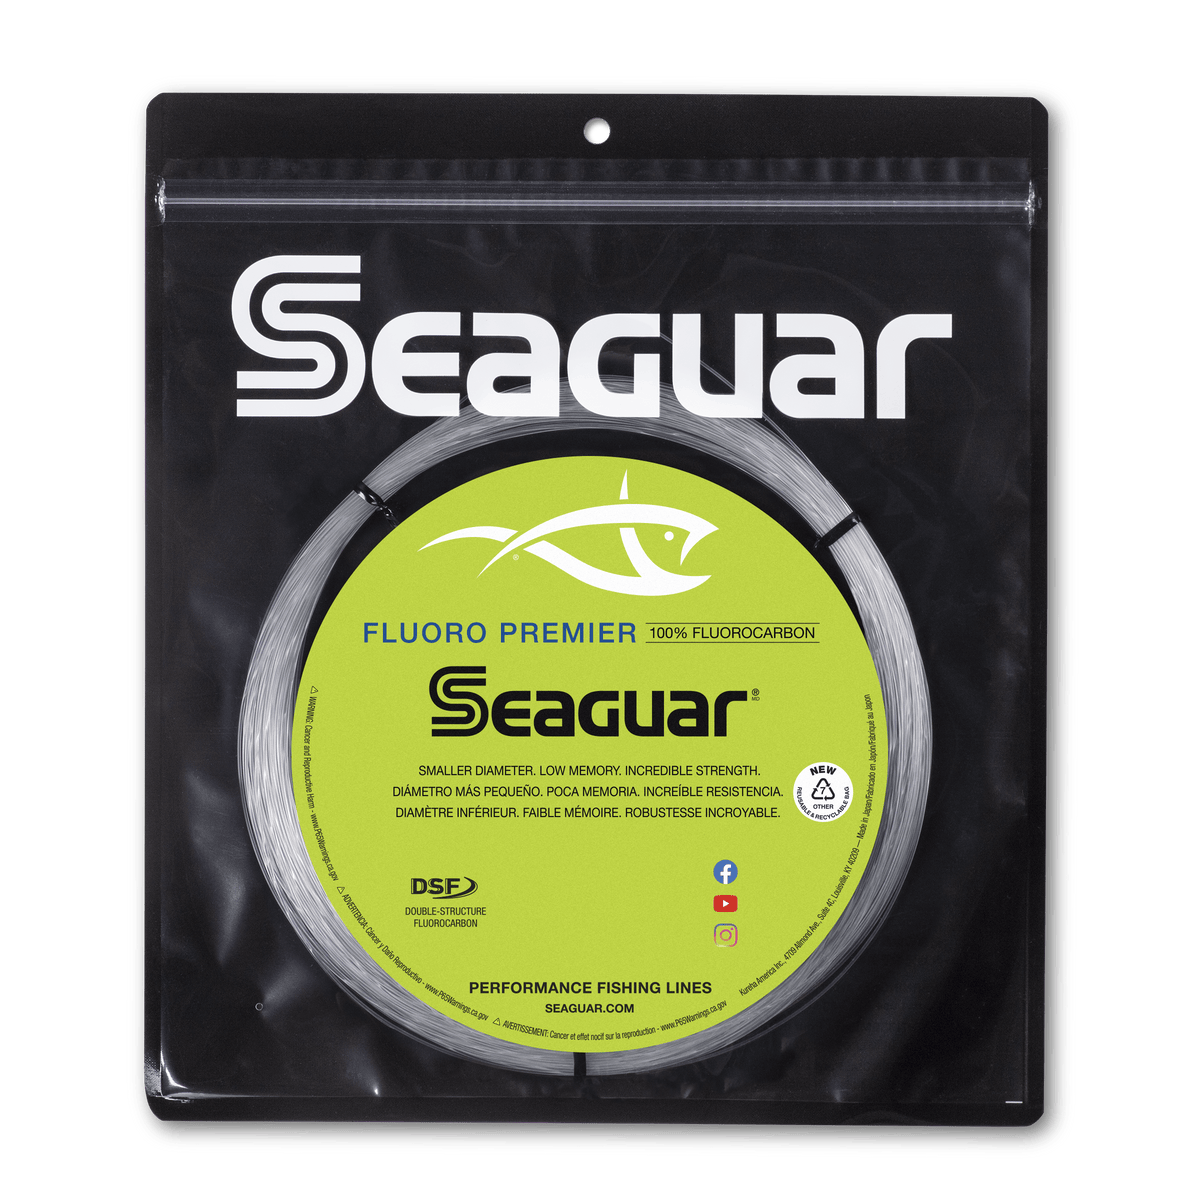 Seaguar 40 lb Line Weight 25 Yard Fluoro Premier Fluorocarbon Fishing Line  25yds